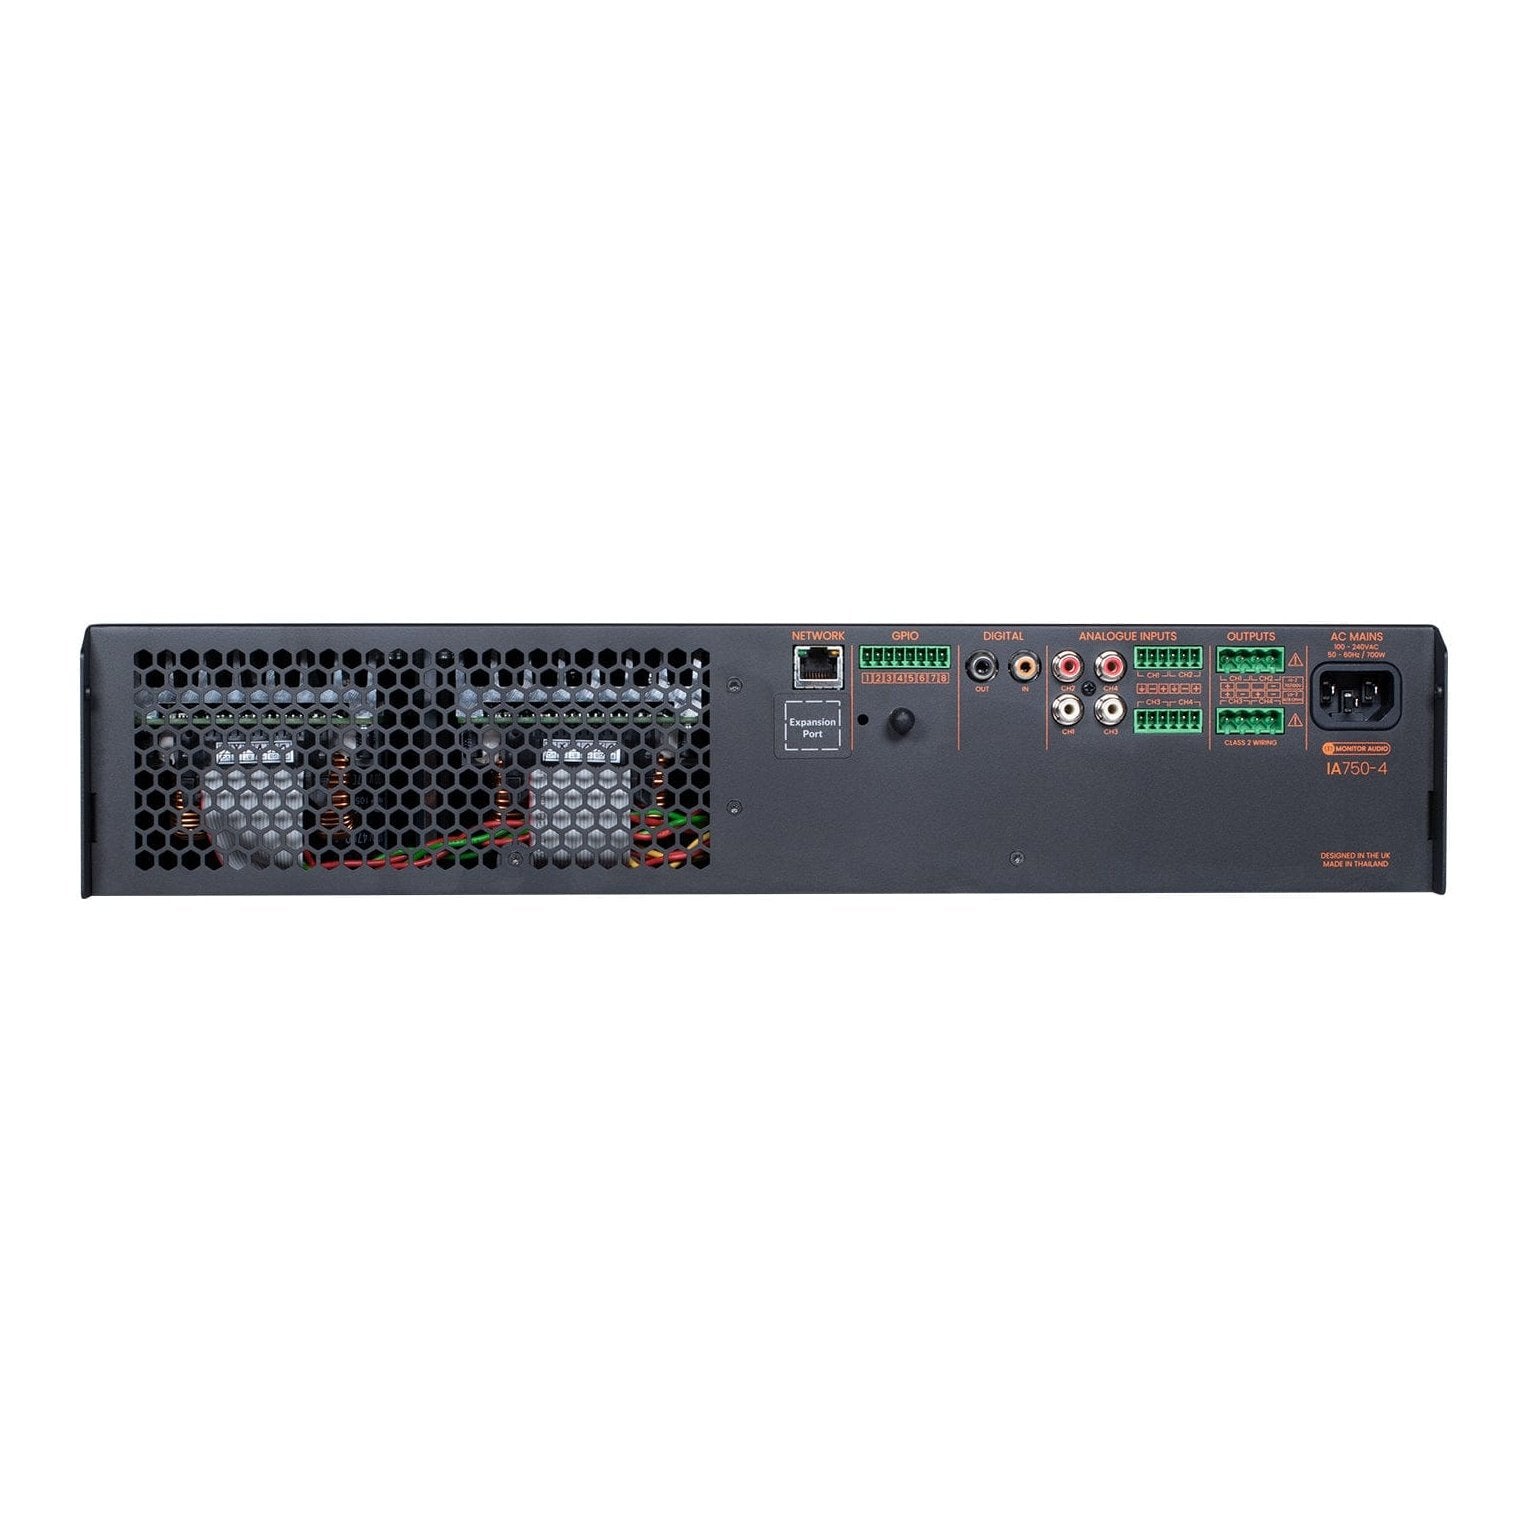 Monitor Audio IA750-4 Matrix Power Ampliler